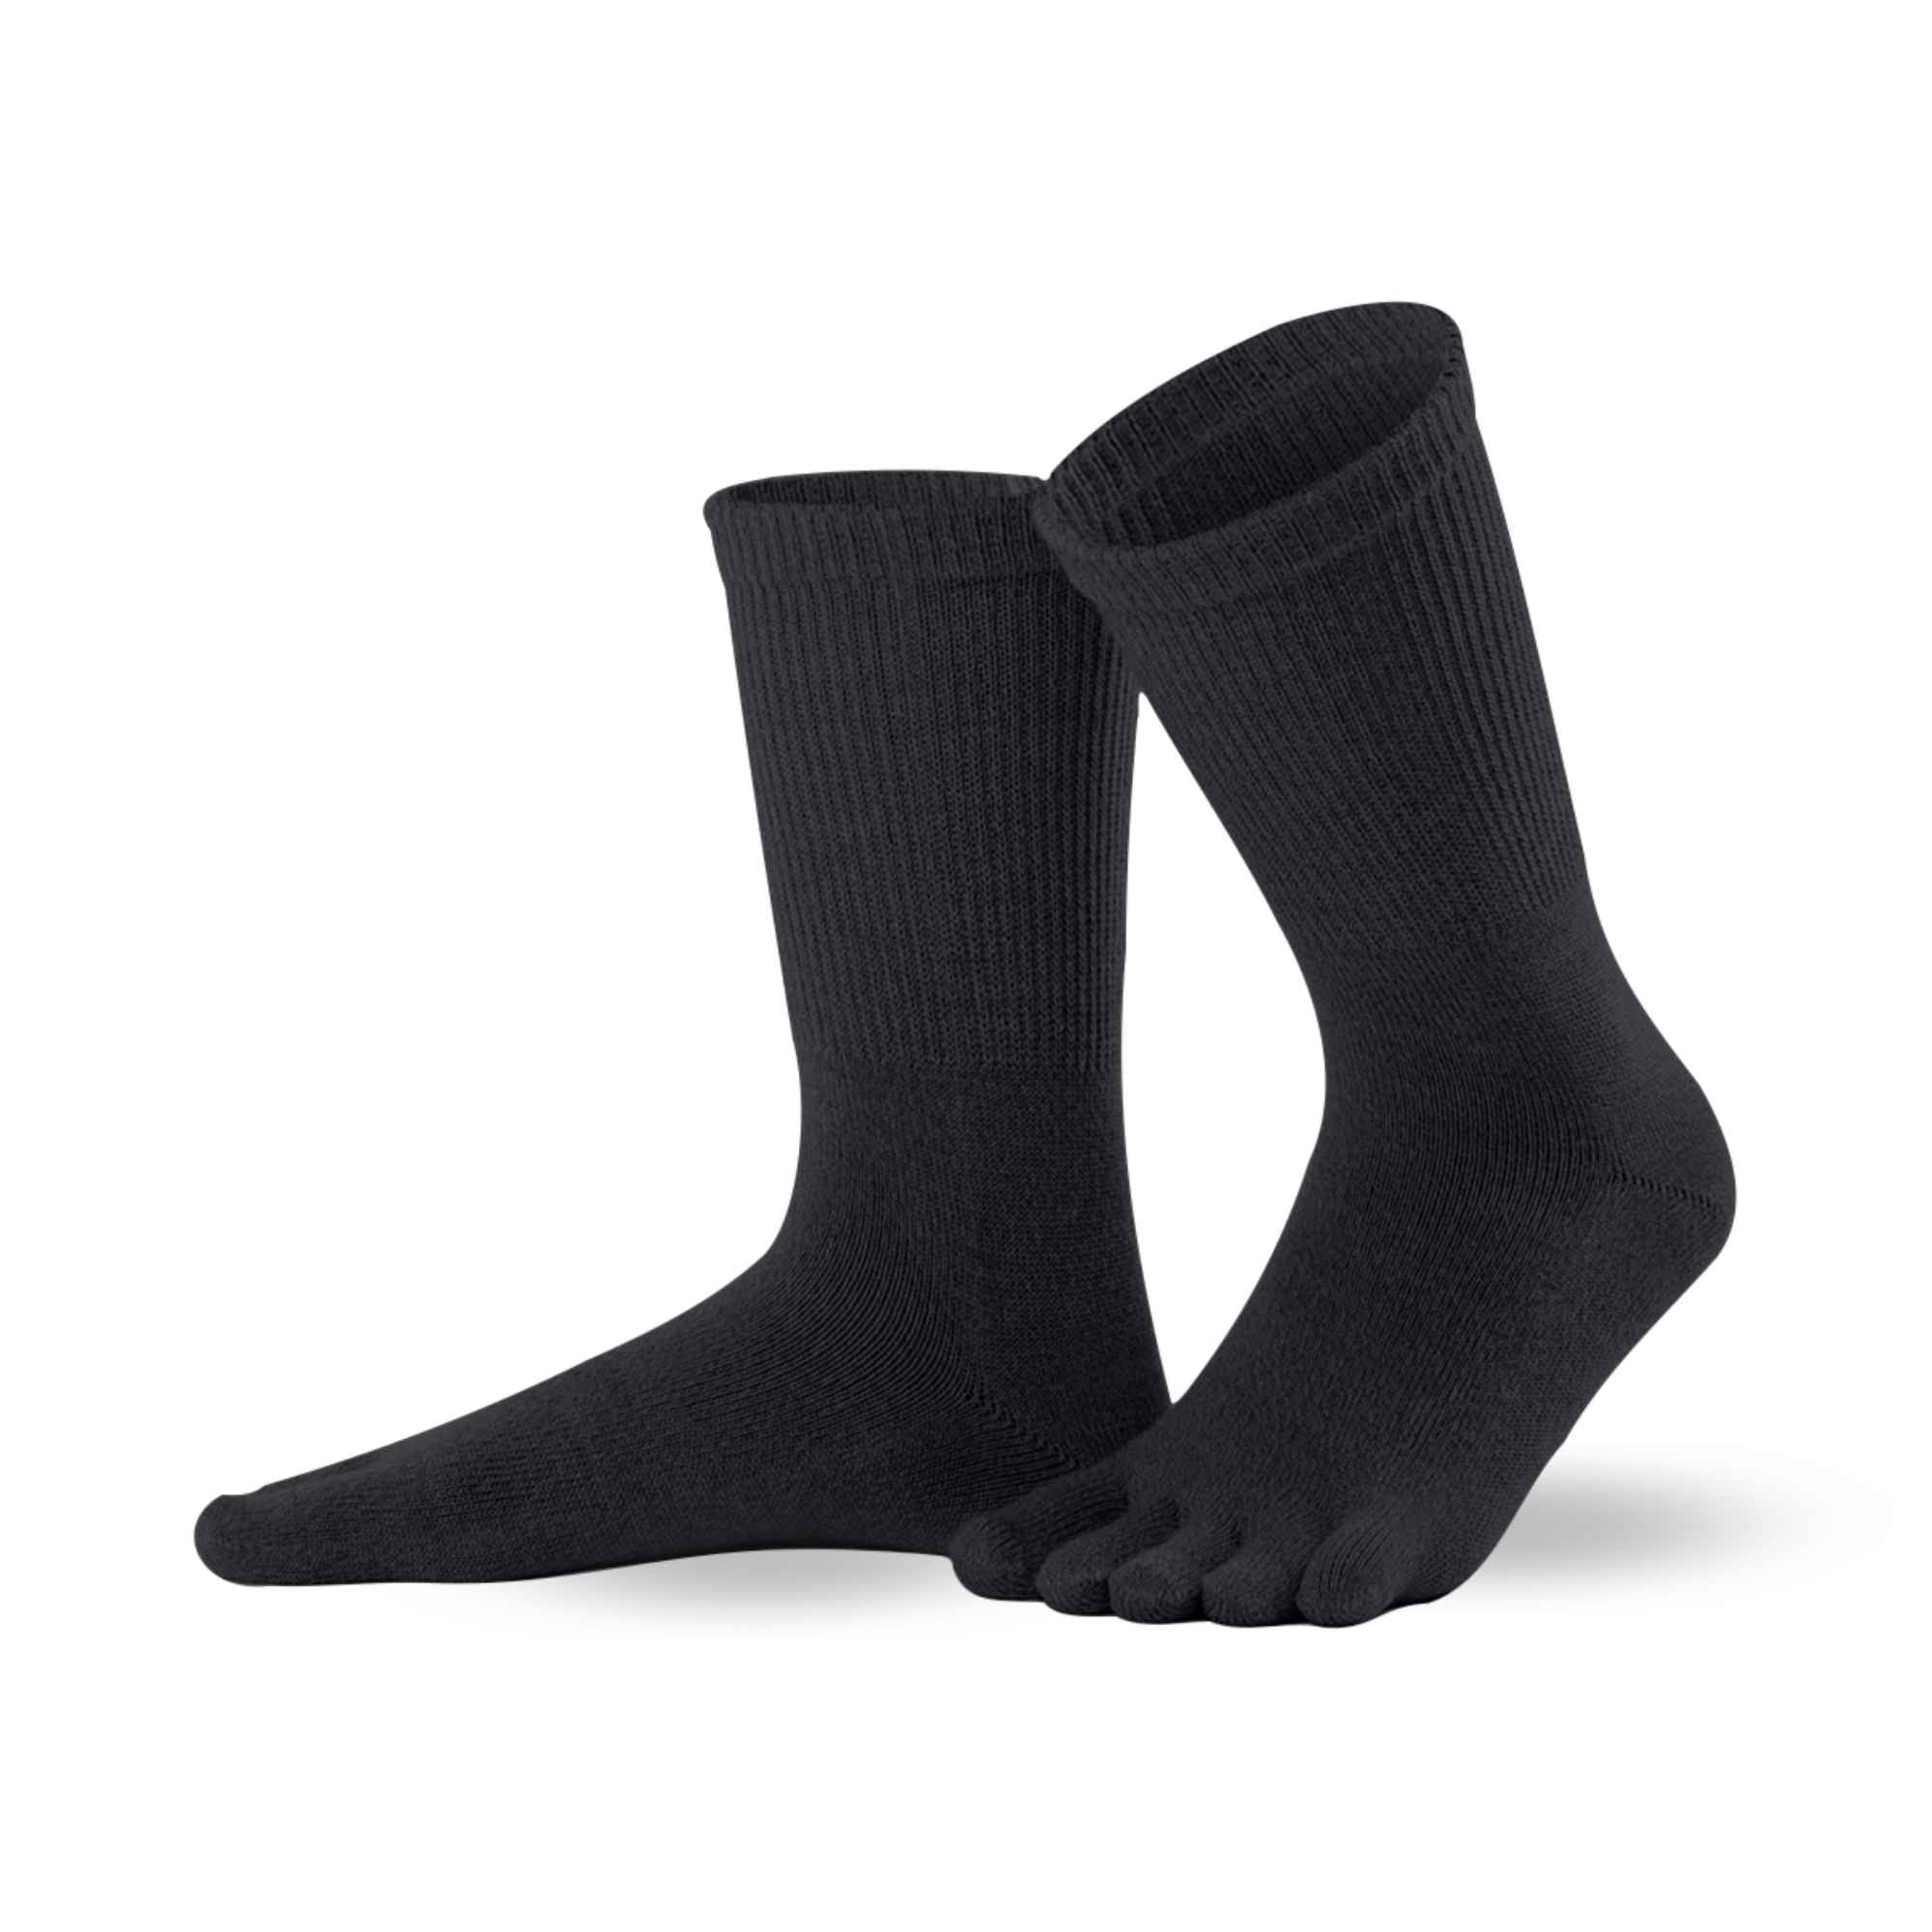 Knitido Mérinos Optimo chaussettes à orteils en laine mérinos - Knitido®.